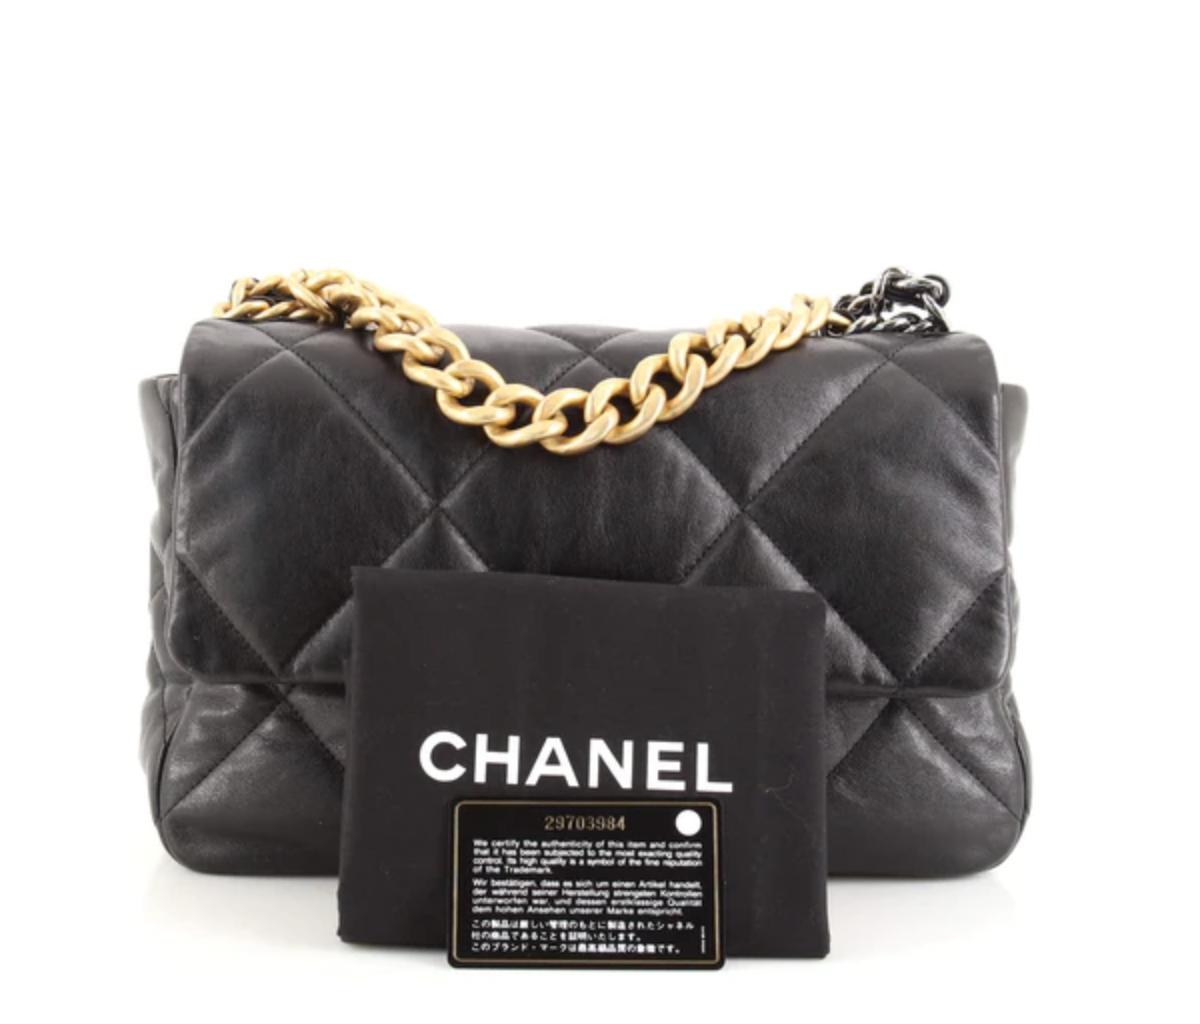 Fashion « Chanel-Vuitton », Sale n°2089, Lot n°91